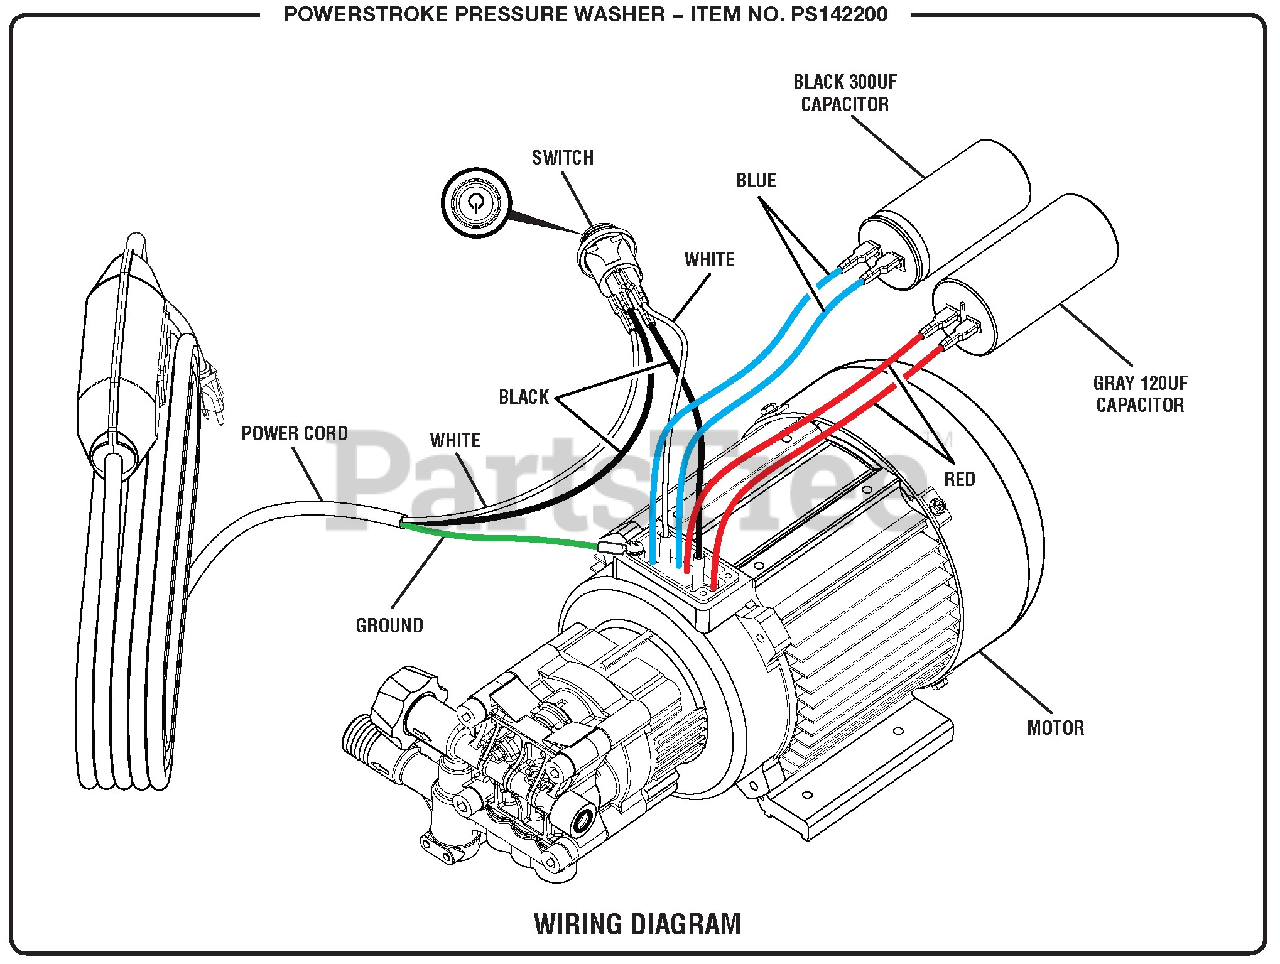 Electric Pressure Washer Wiring Diagram